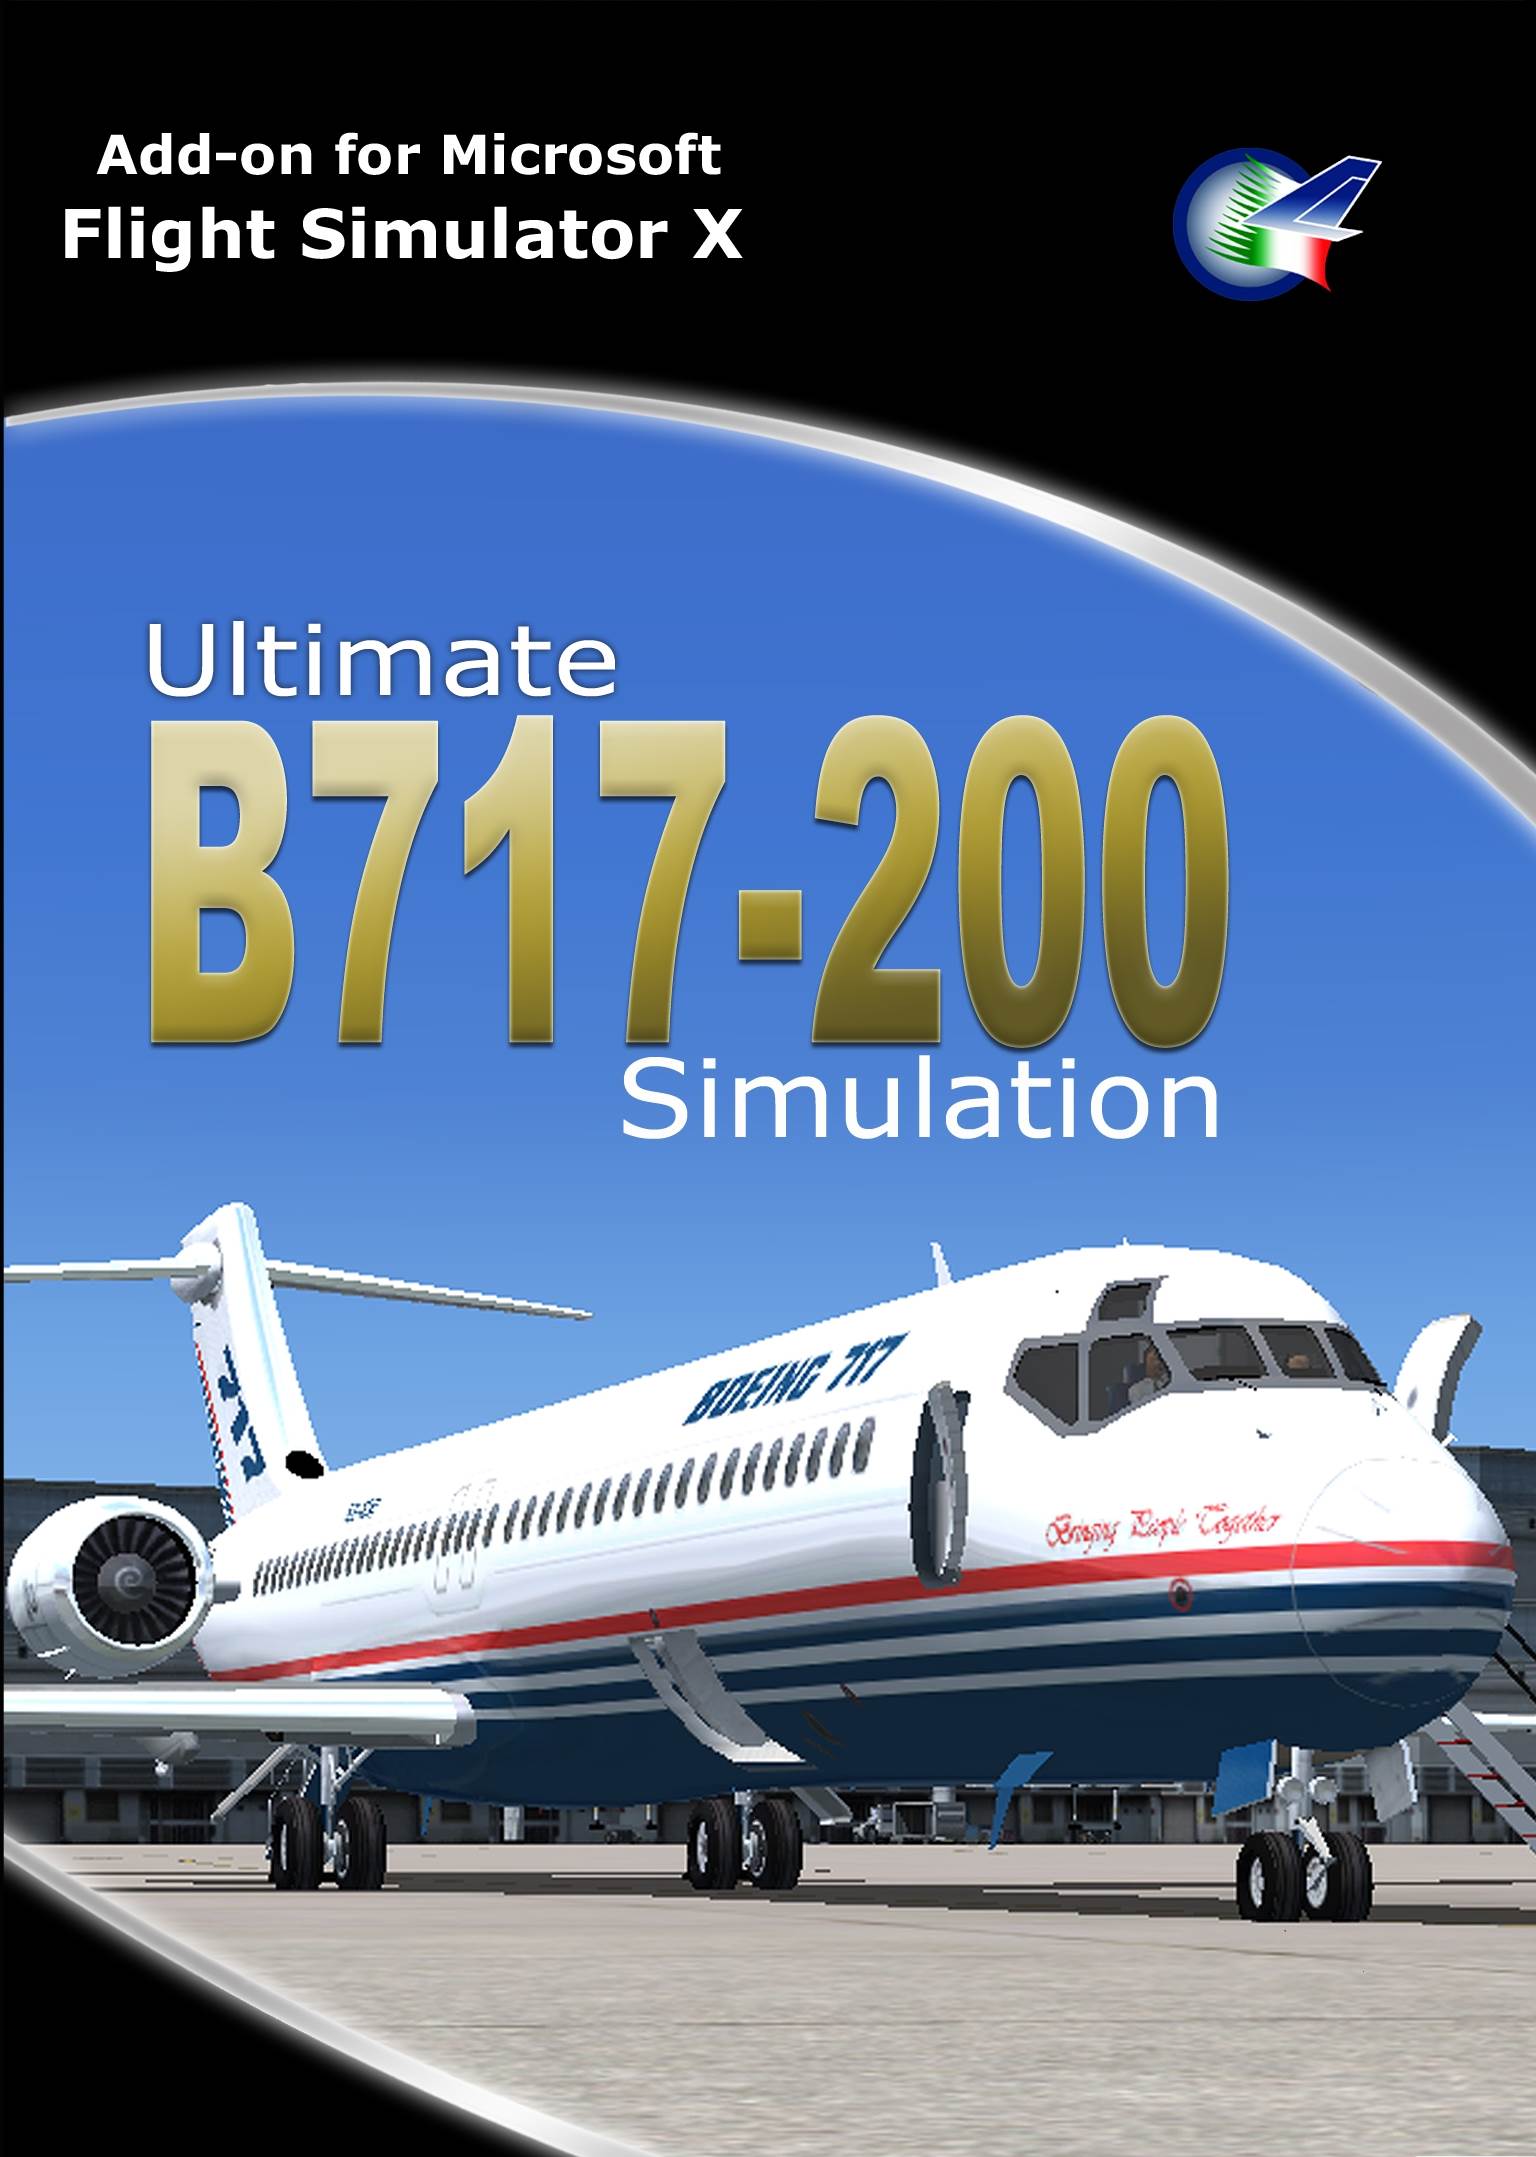 Ultimate B717-200 Simulation